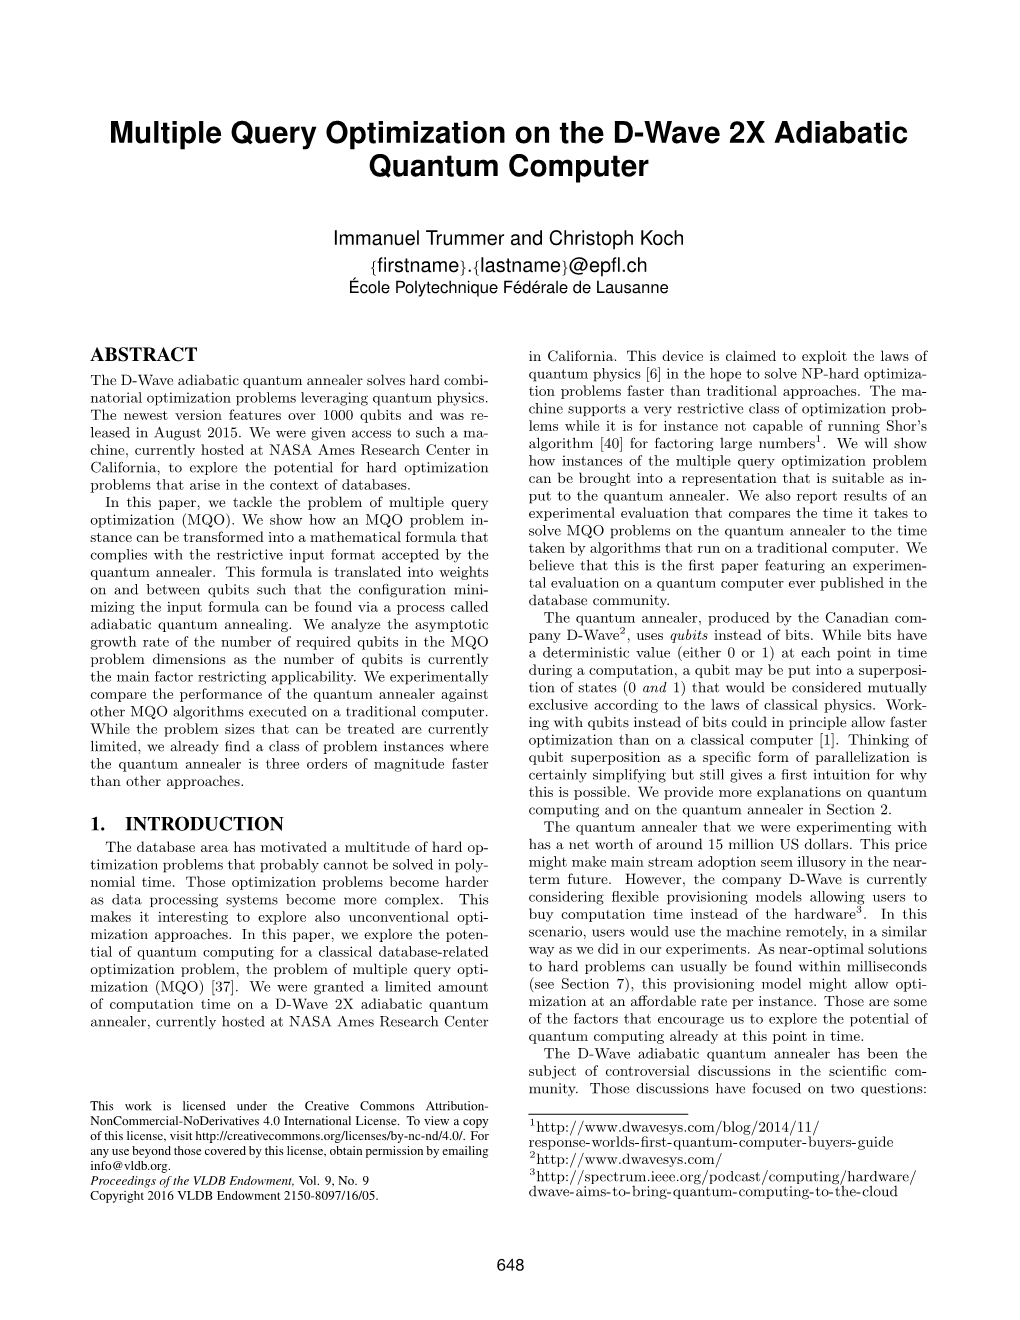 Multiple Query Optimization on the D-Wave 2X Adiabatic Quantum Computer